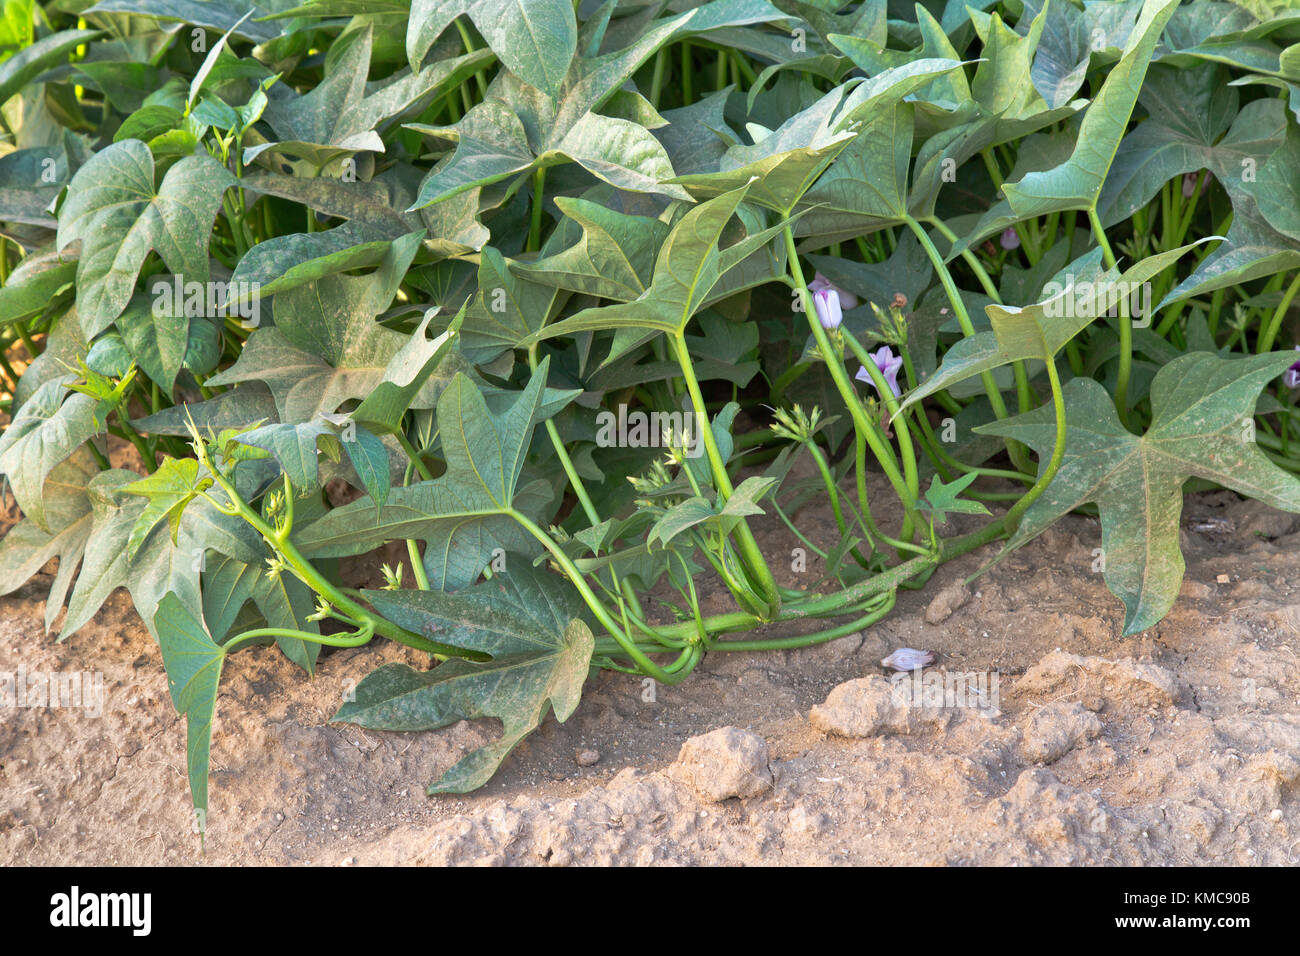 Kamote foliage, flowering plant, cultivar of Sweet Potato 'Ipomoea balatas'. Stock Photo